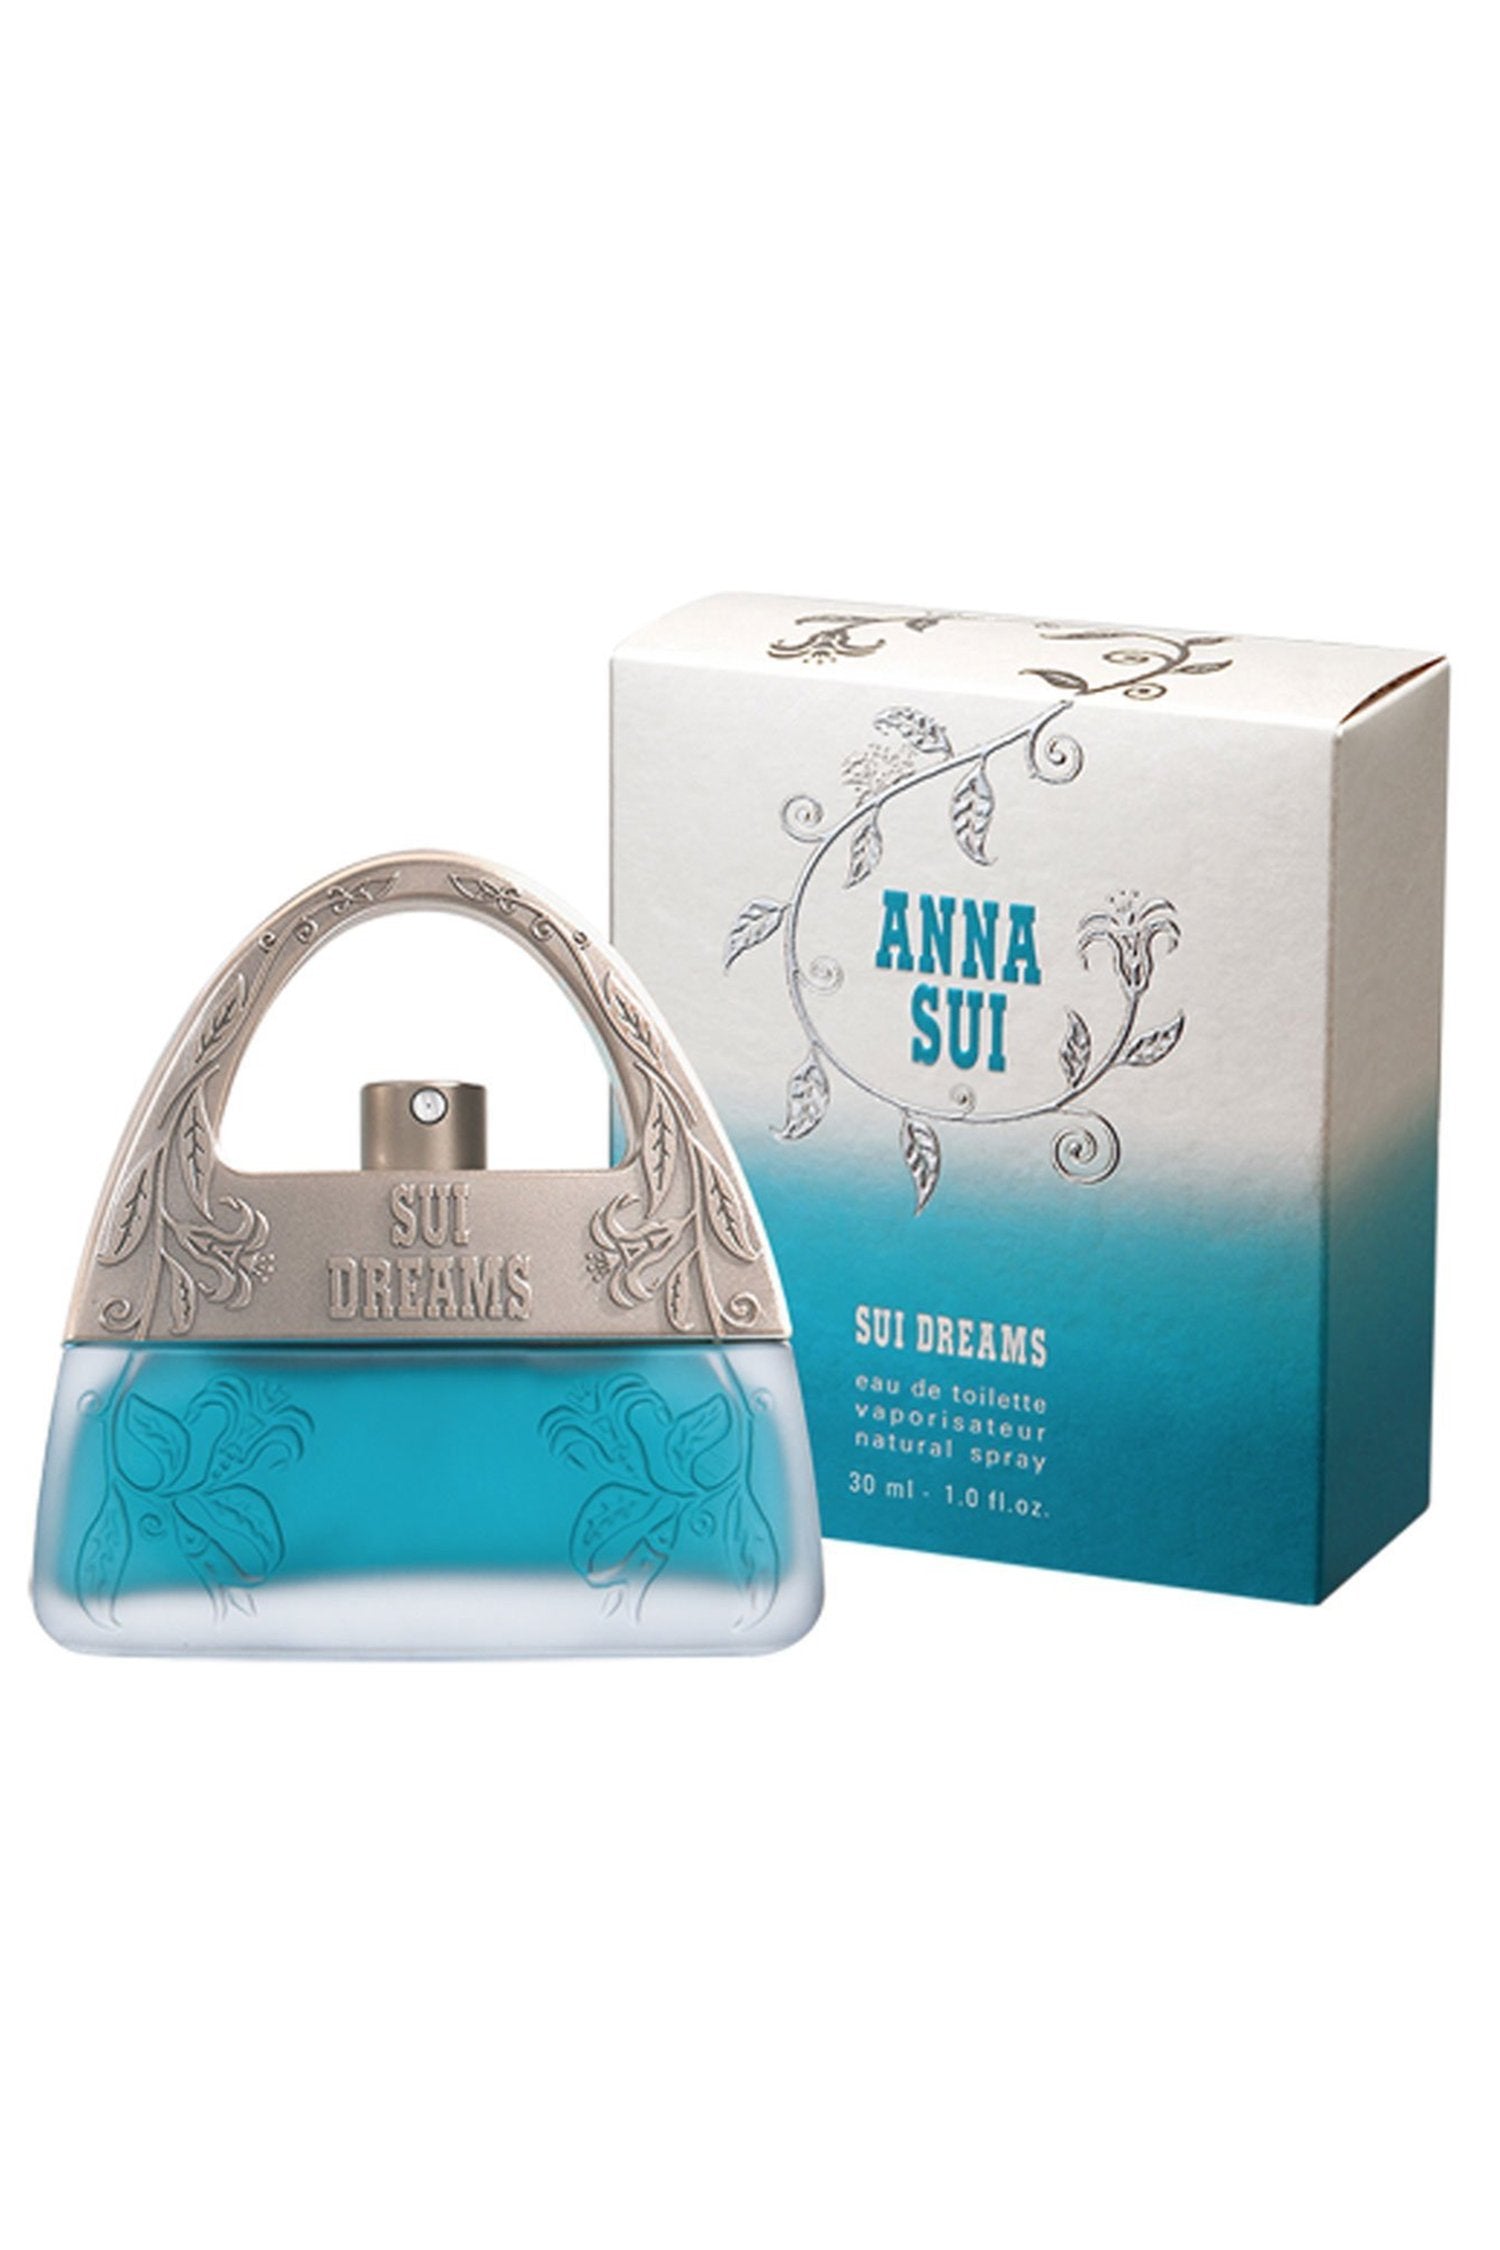 Sui Dream is a blue-colored bottle, bag-shaped handle, sprayer, blue box features a floral design